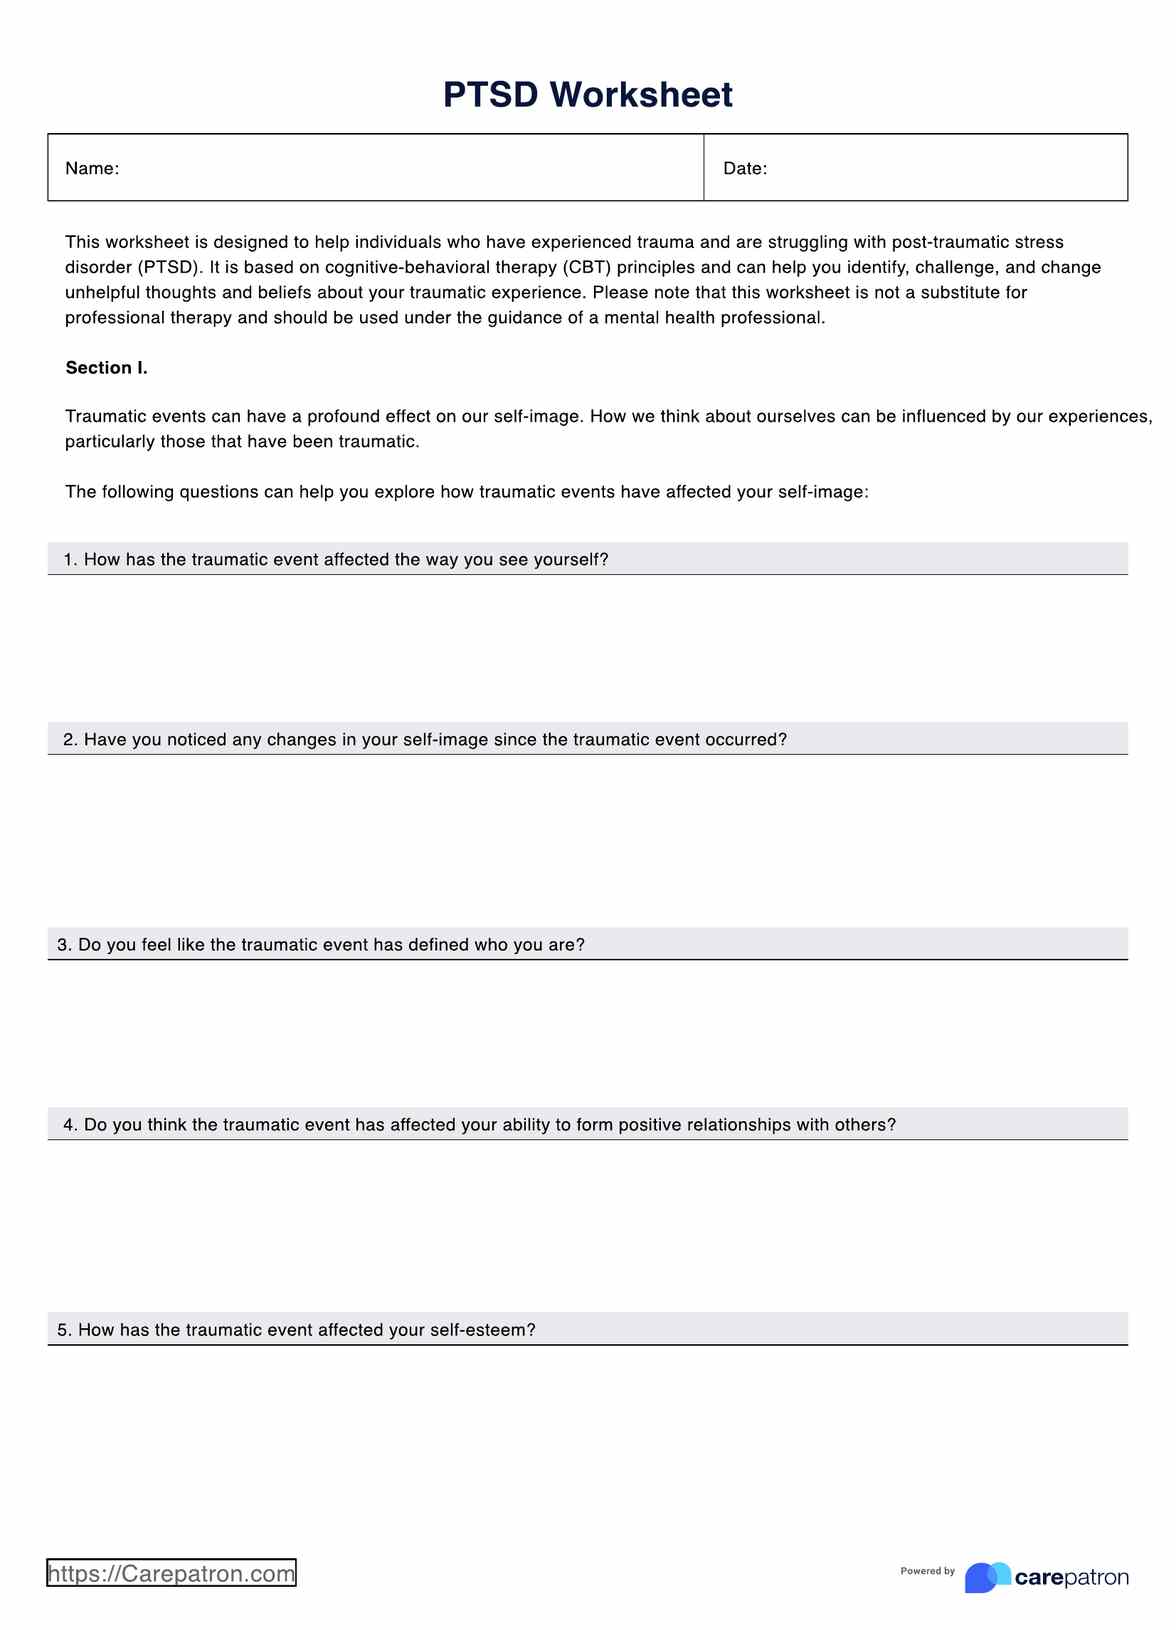 PTSD Worksheet PDF Example